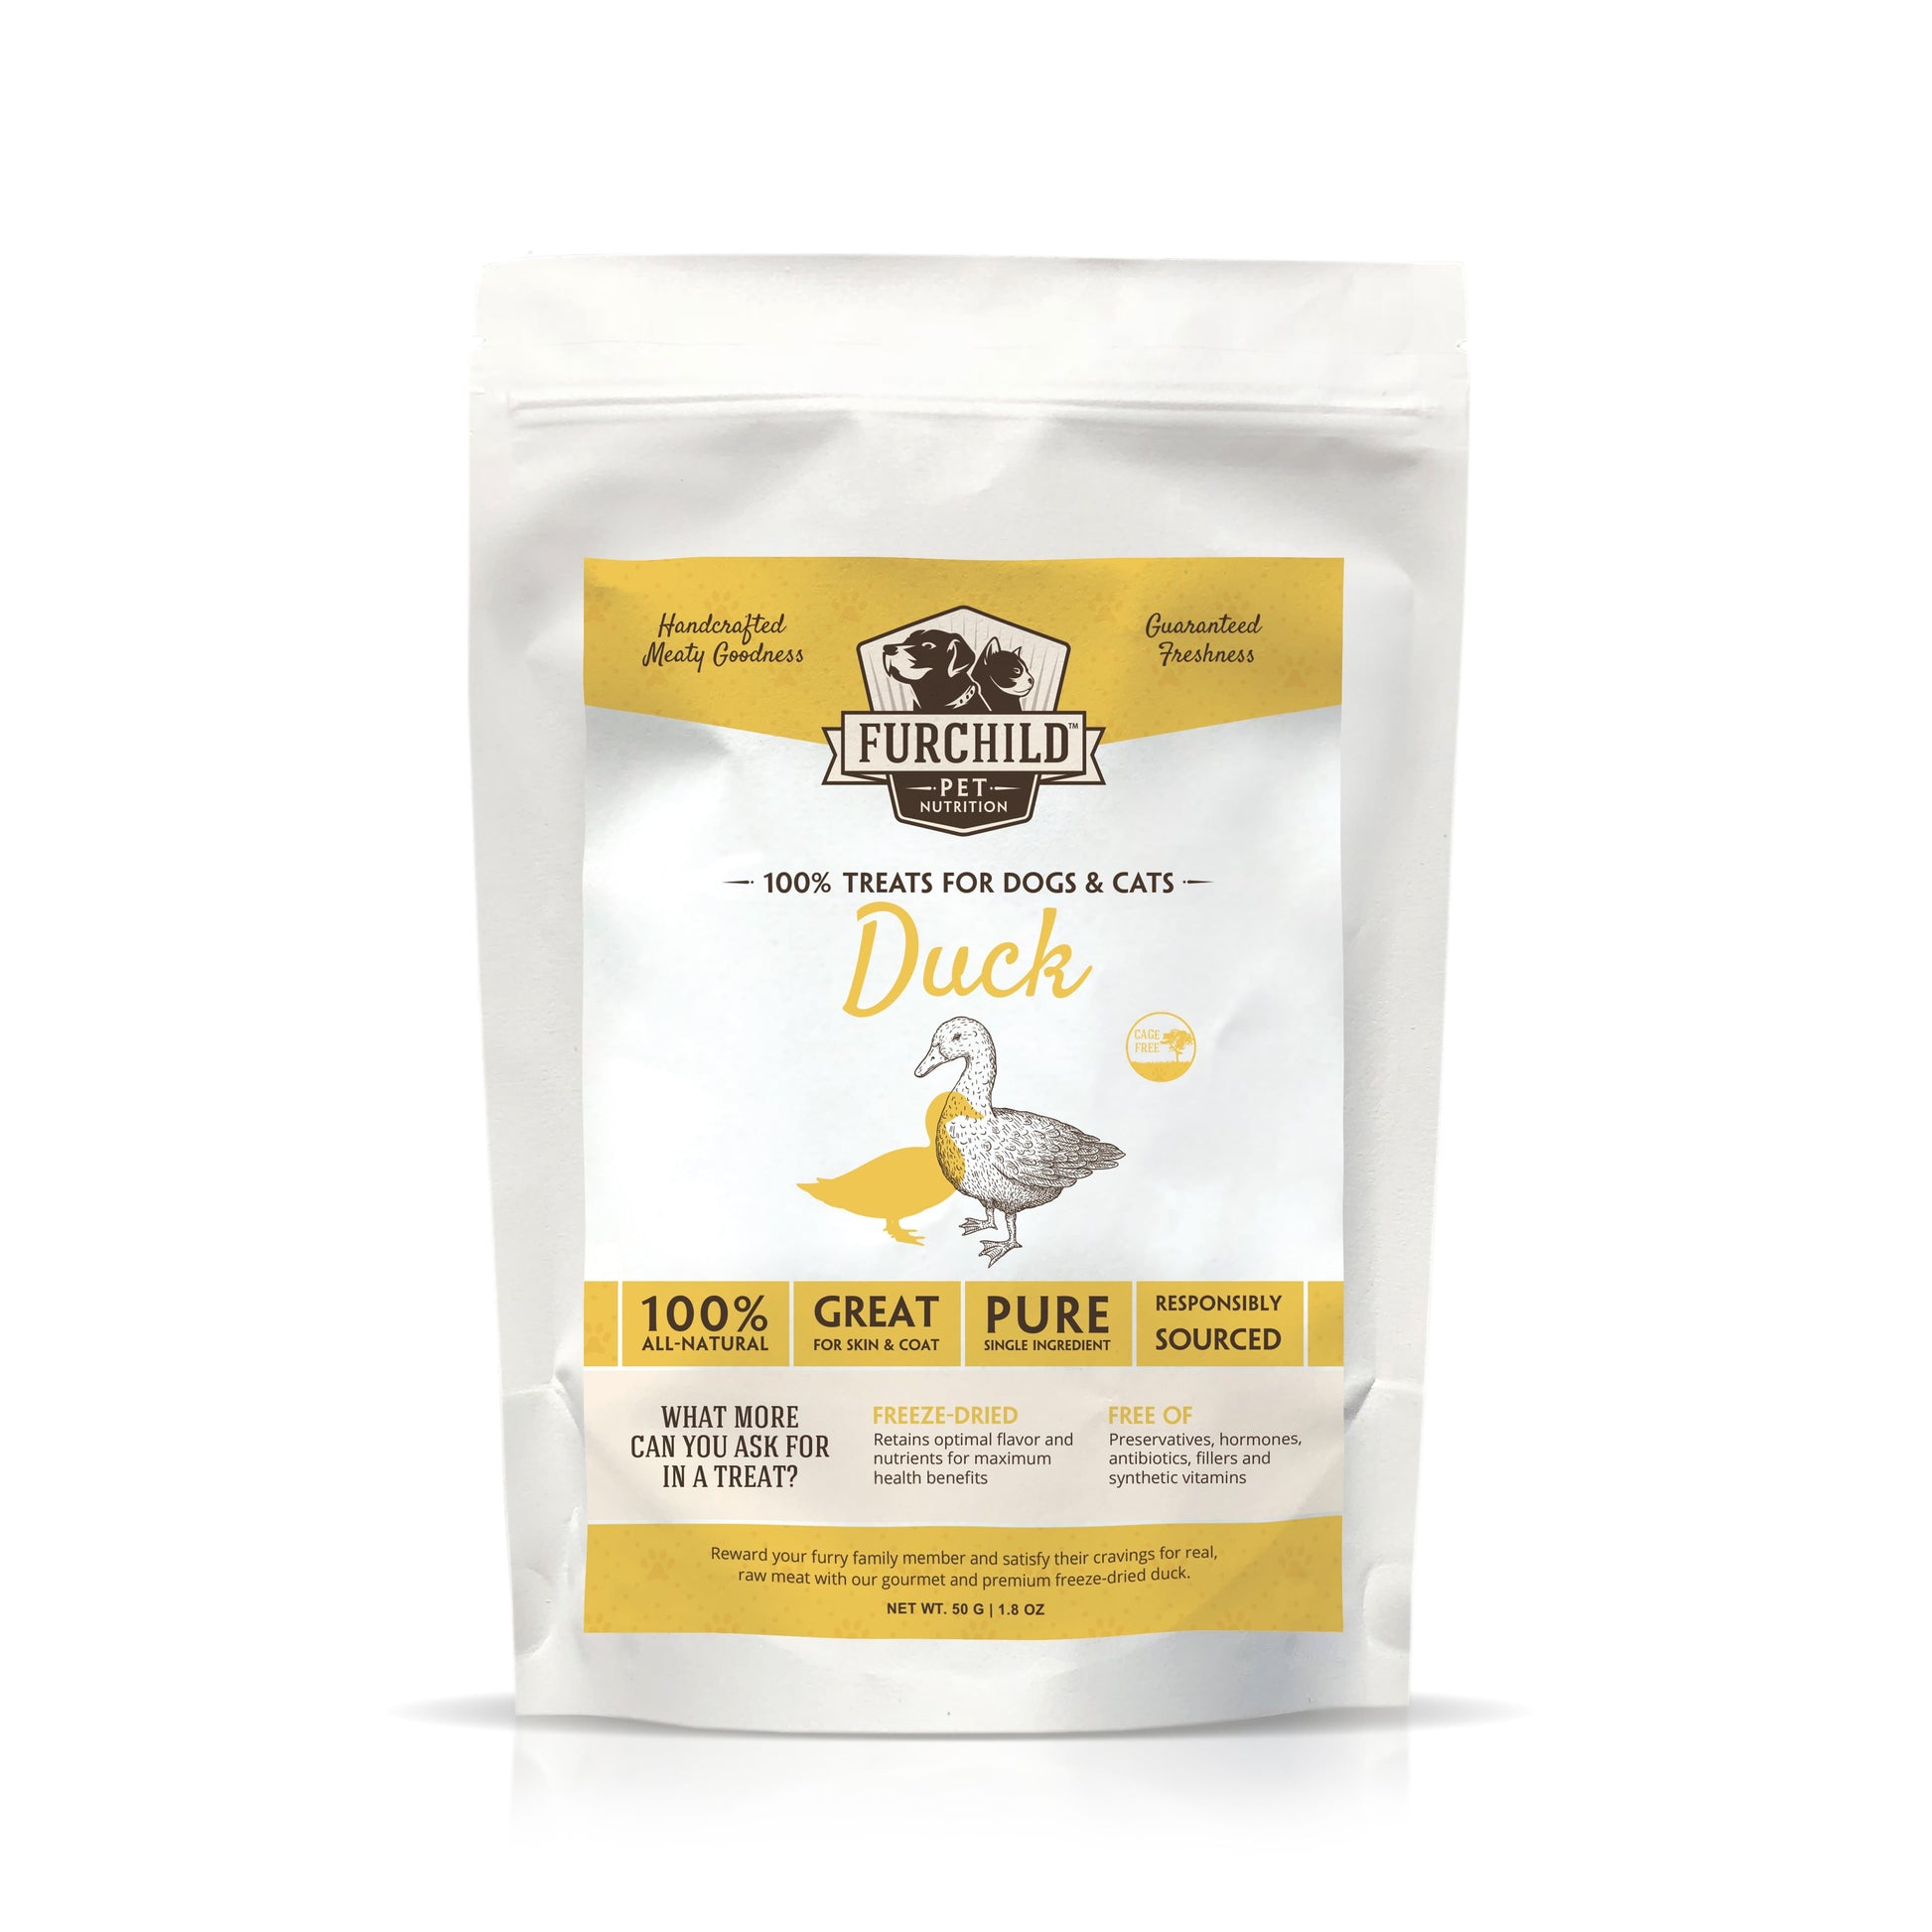 FURCHILD Premium Freeze-Dried Pasture-Raised Duck Breast Raw Pet Treats - My Cat and Co.